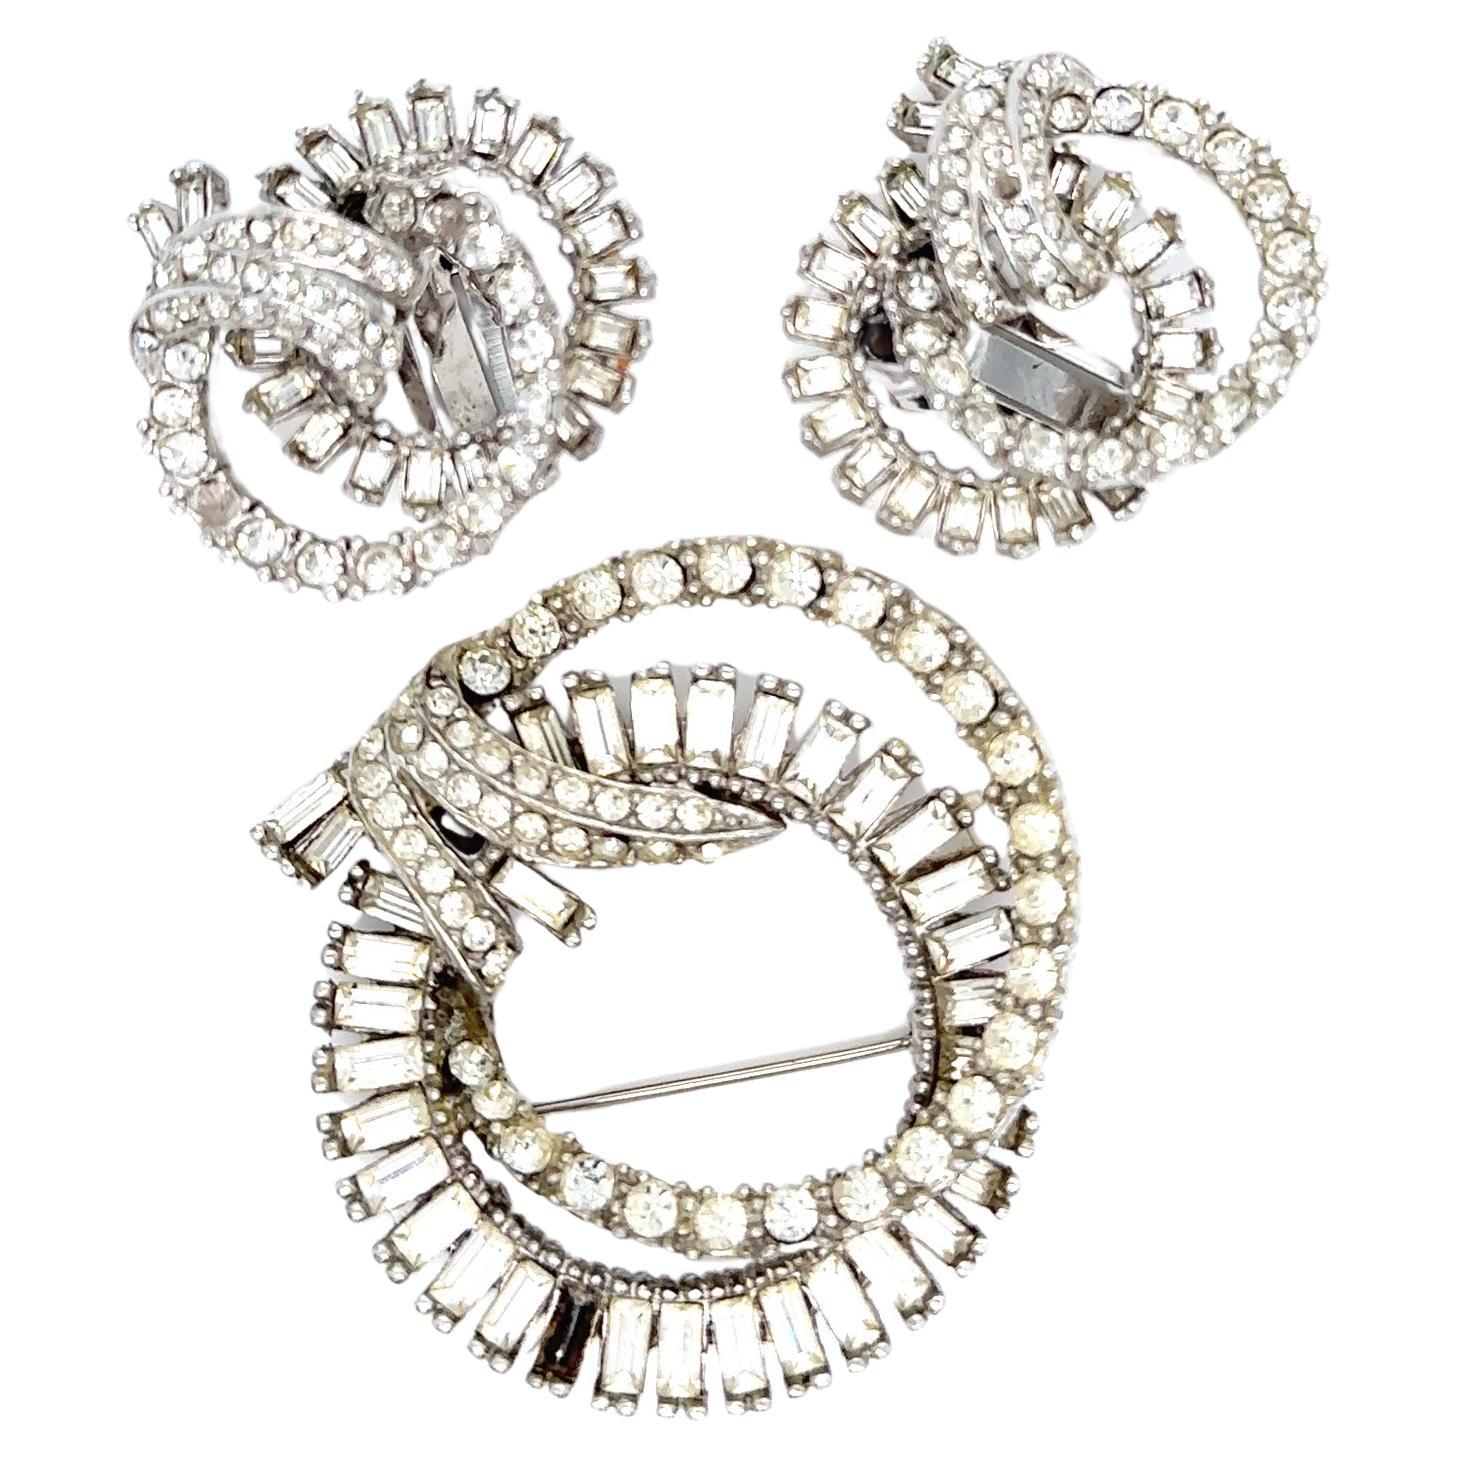 Marilyn Monroe Memorabilia Personal Costume Matching Jewelry Set Brooch/Earrings